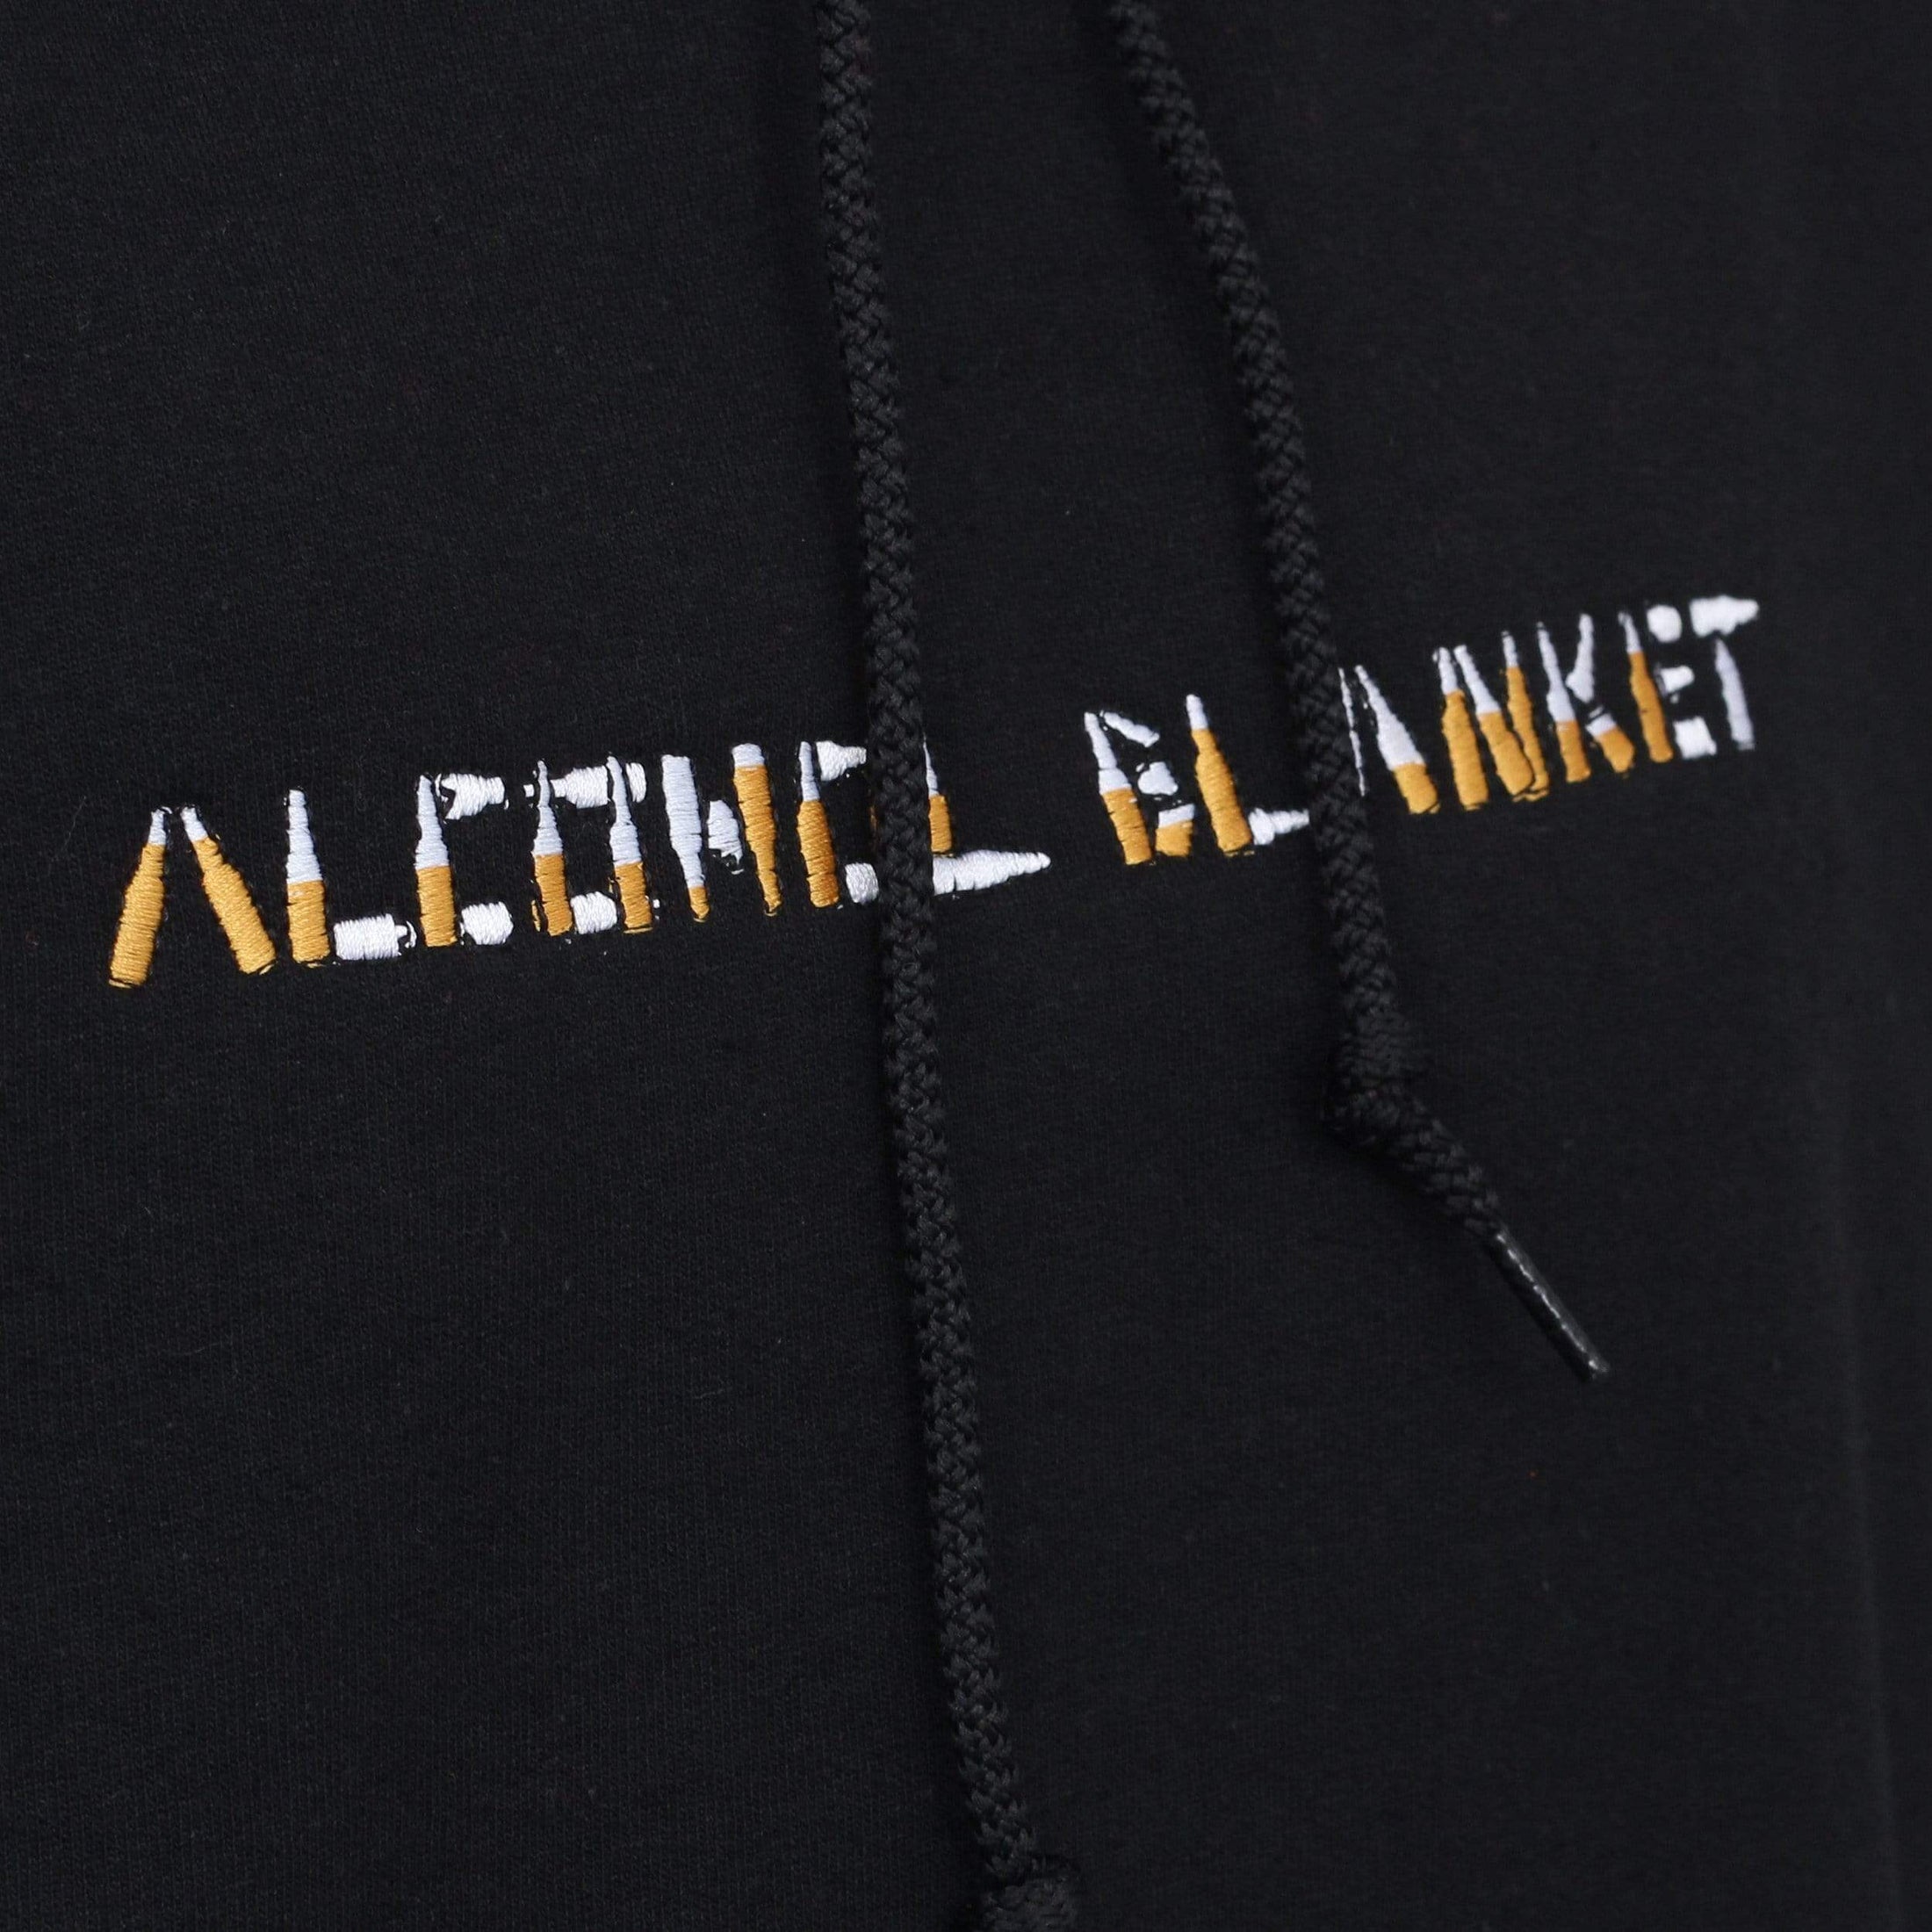 Alcohol Blanket Bottles Hood Black